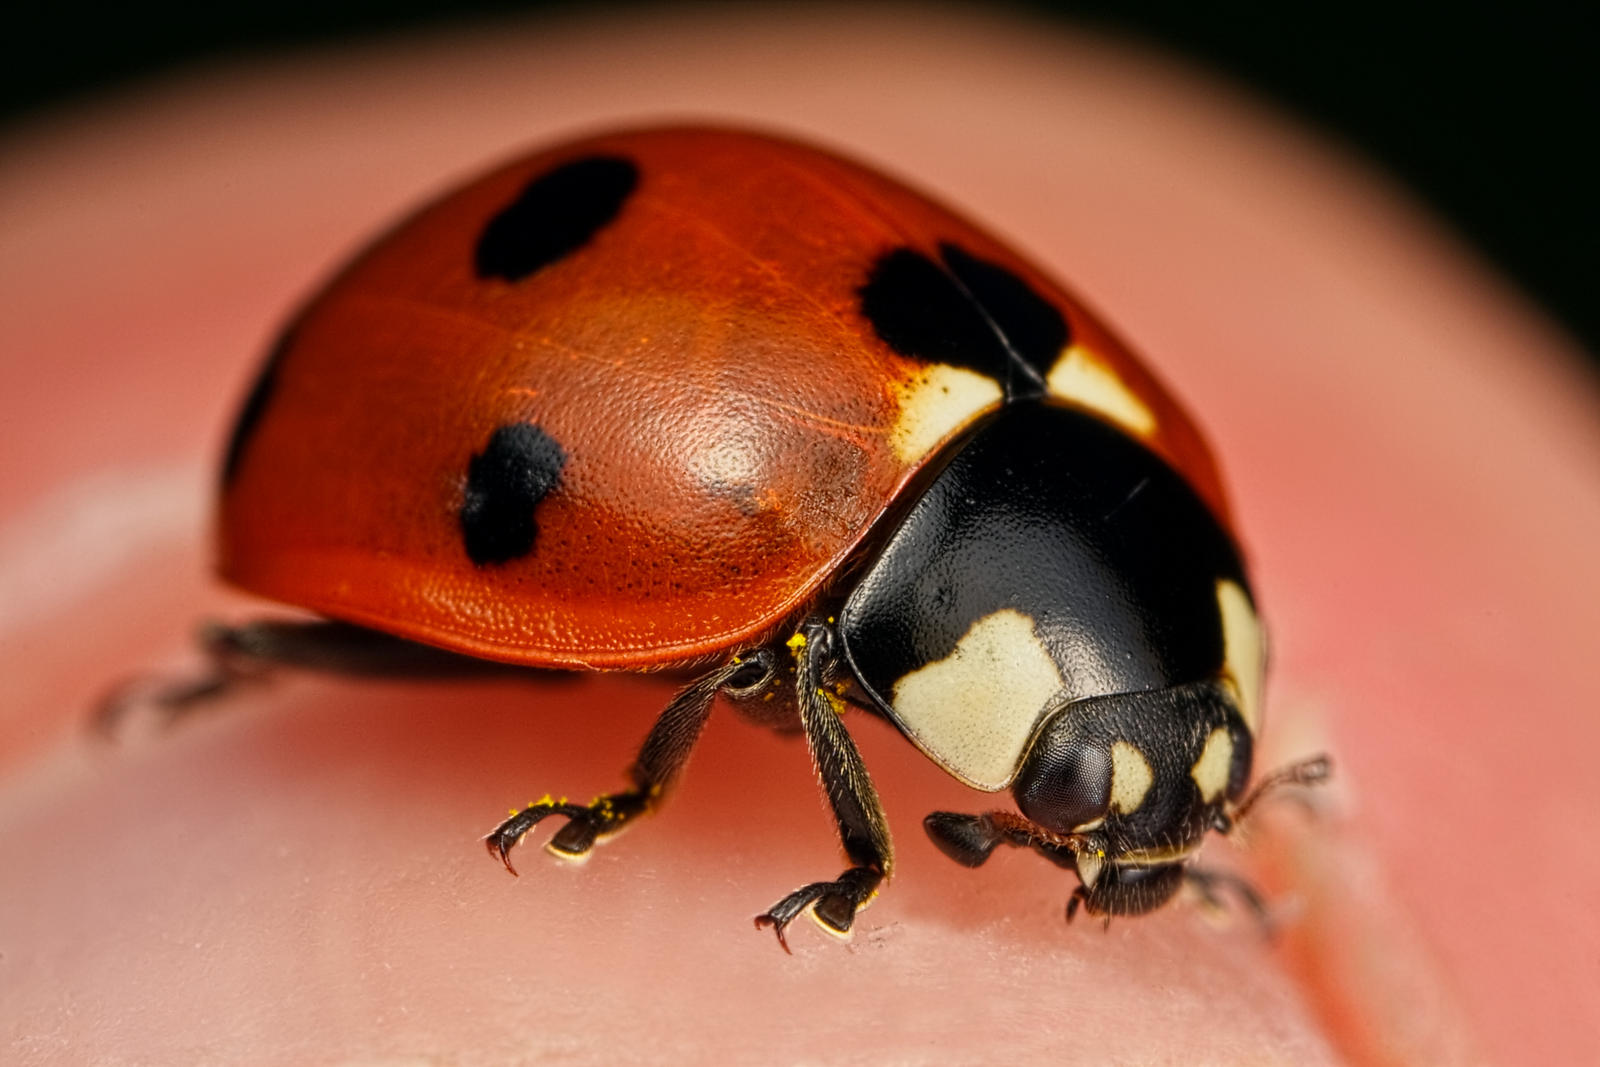 My_Pet_Ladybug_by_dalantech.jpg